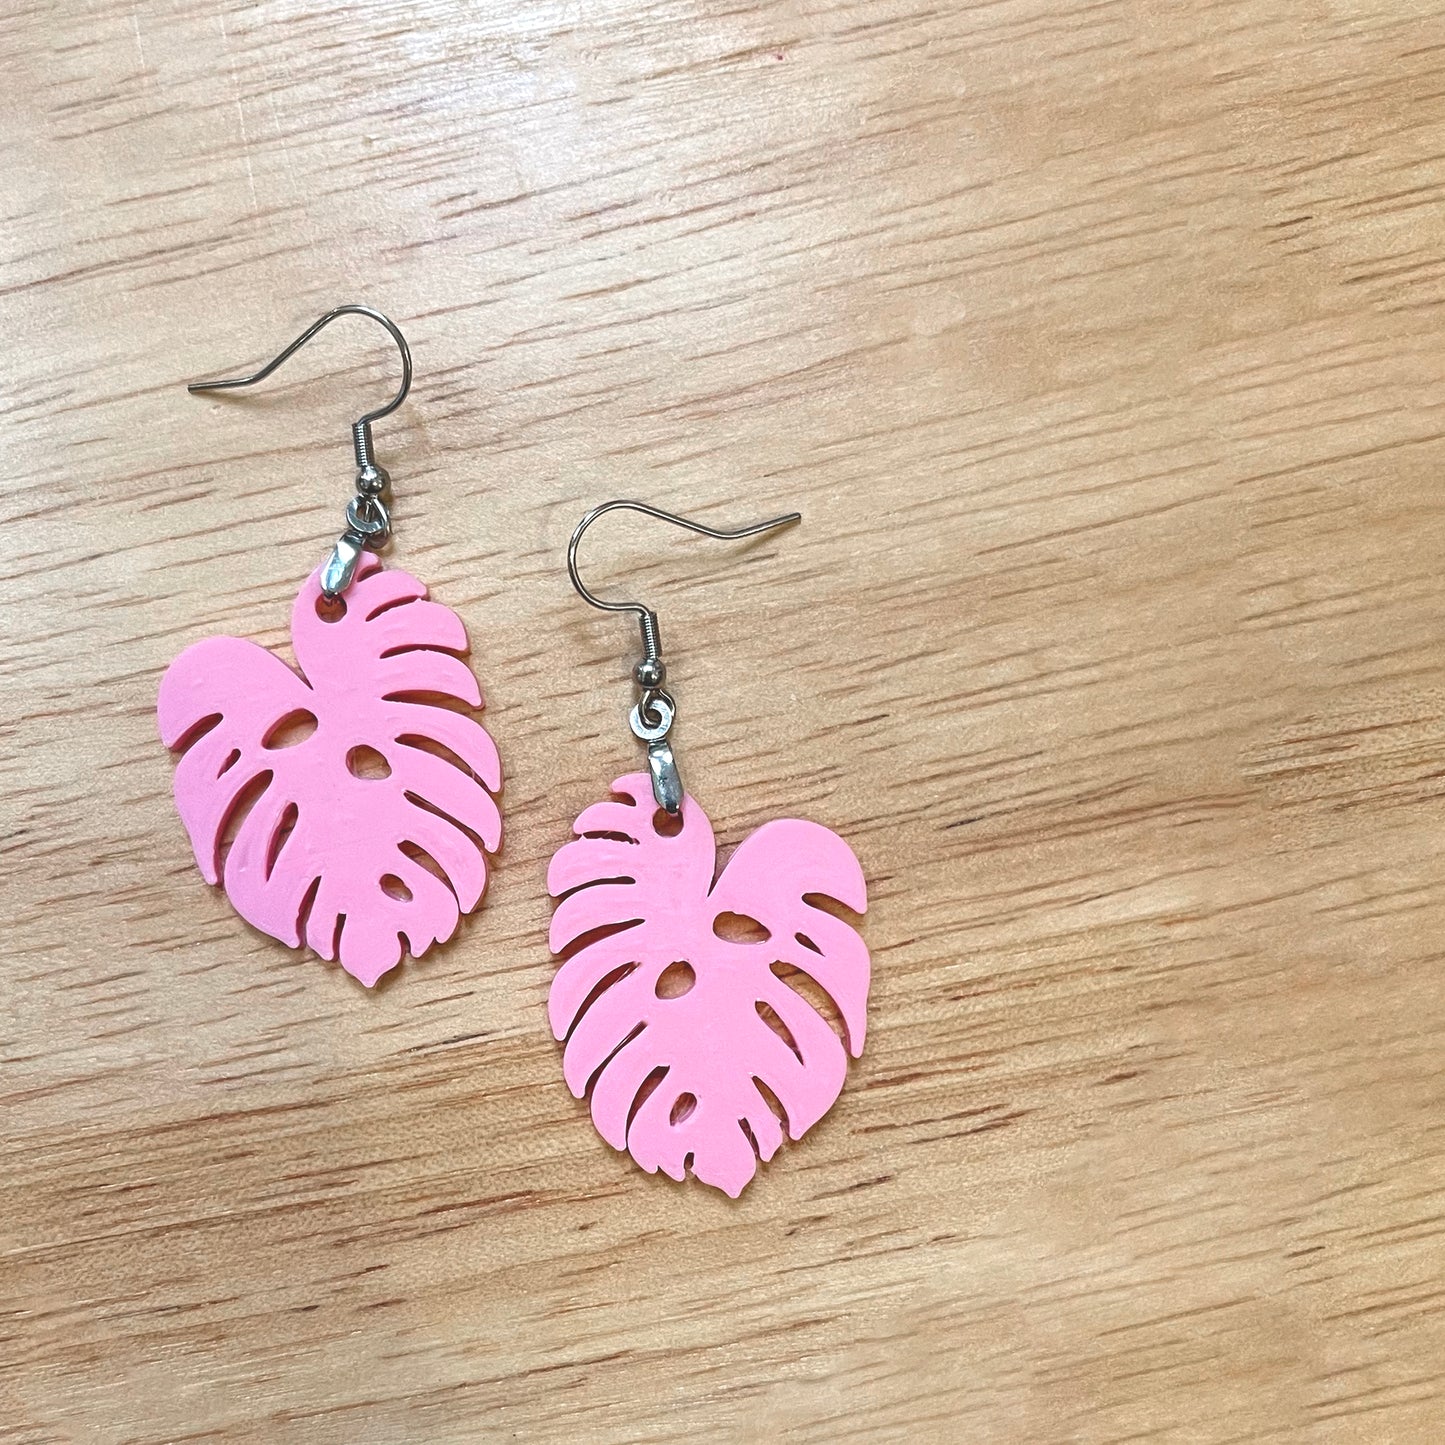 monstera leaf earrings handmade 3d printed gifts for plant lovers